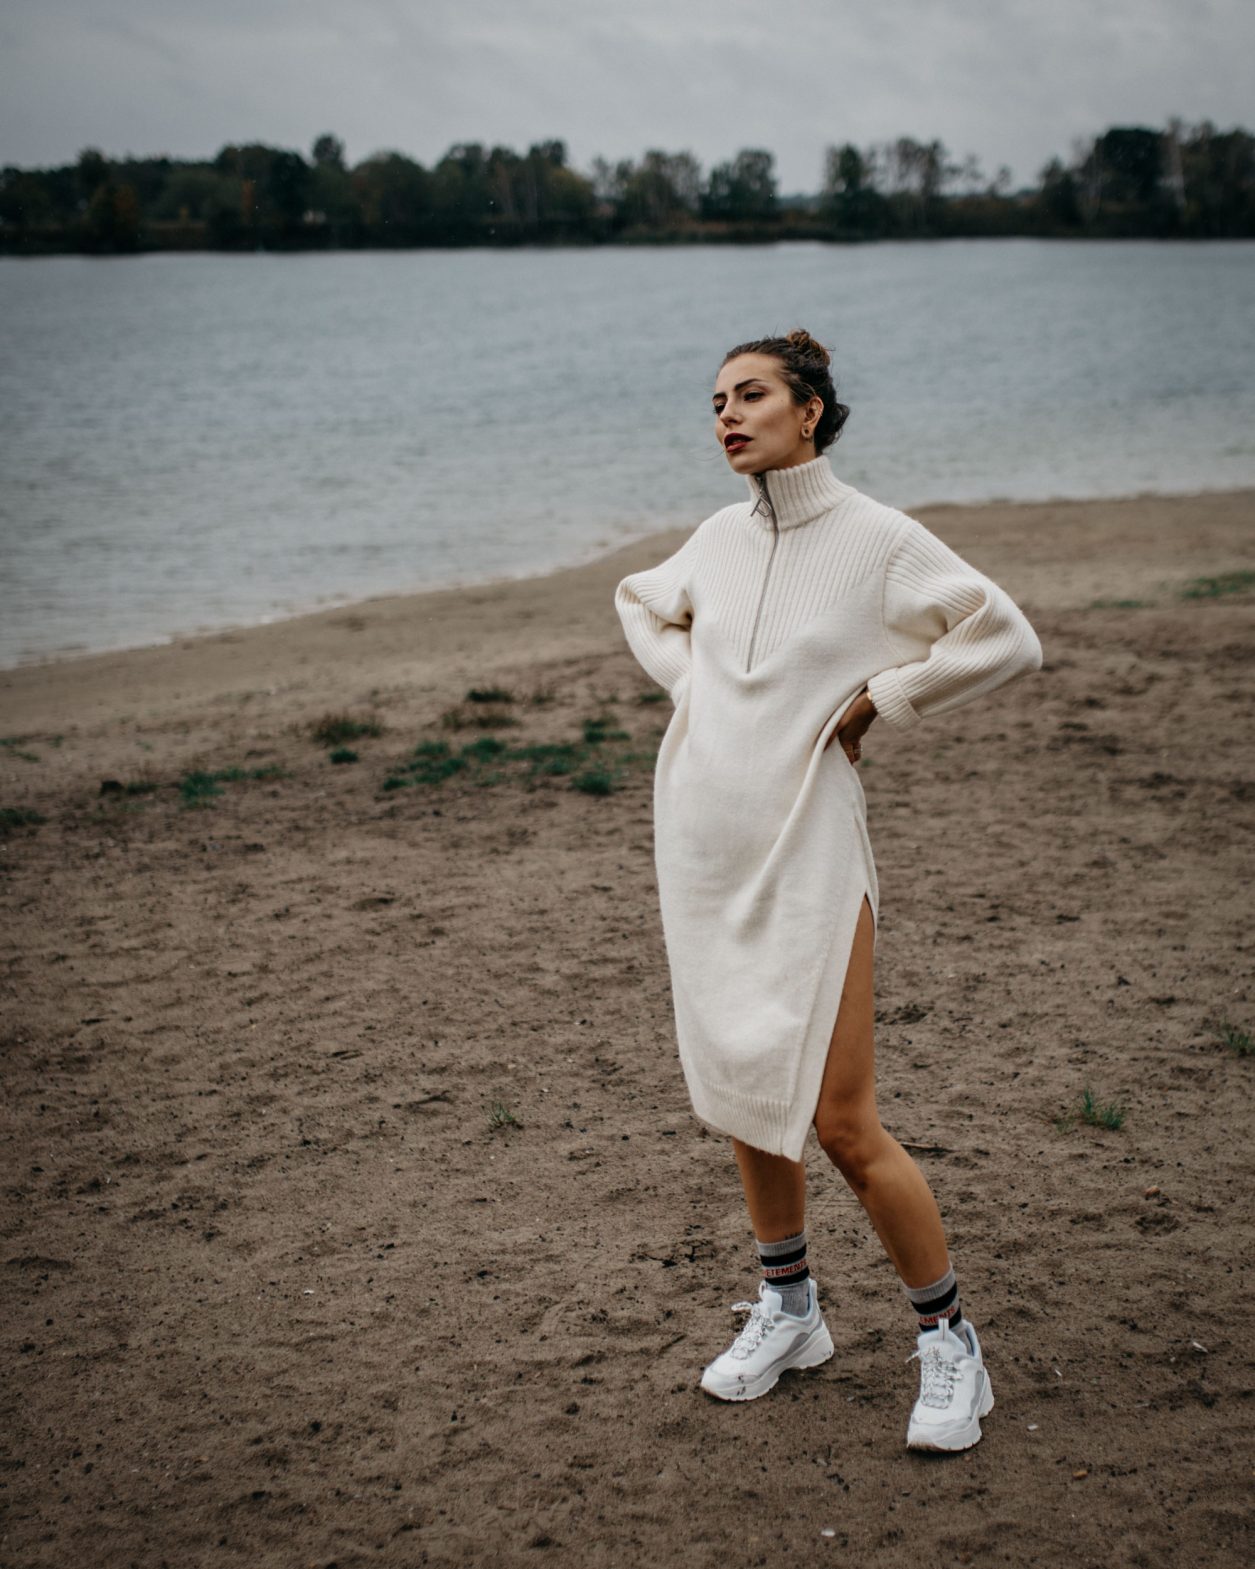 H&M x Pringle of Scotland | Design Kollektion | 2019 | Herbst Winter | Editorial Shooting by Berlin based Fashion Blogger Masha Sedgwick | Flughafen See Tegel | style: moody, comfy, clean 